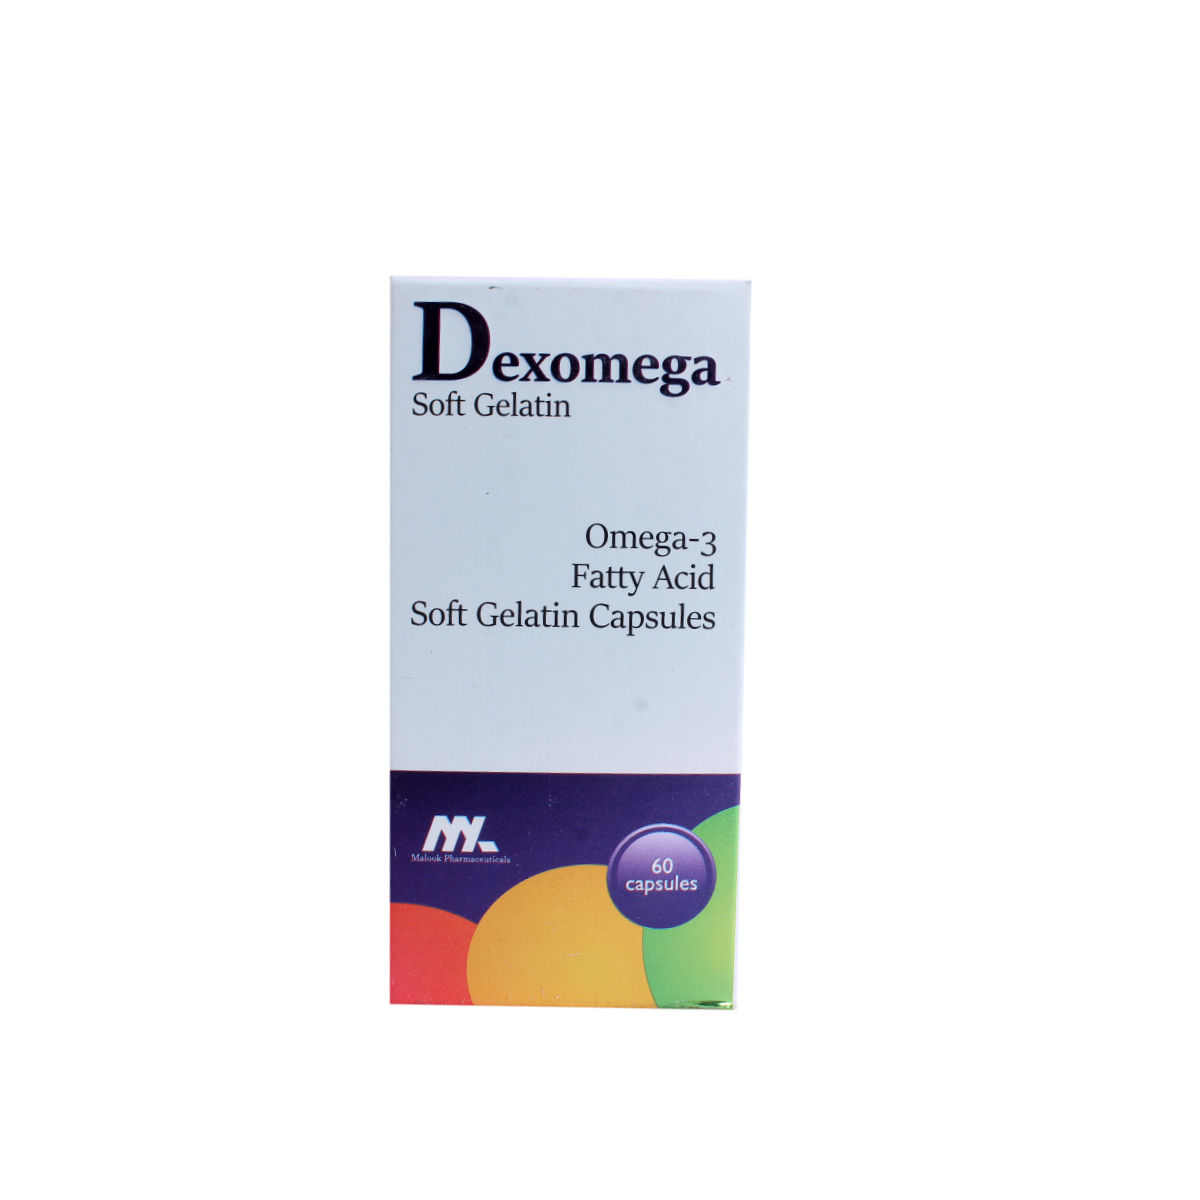 DEXOMEGA 1000MG SOFTGEL CAPSULES 60'S, Pack of 1 